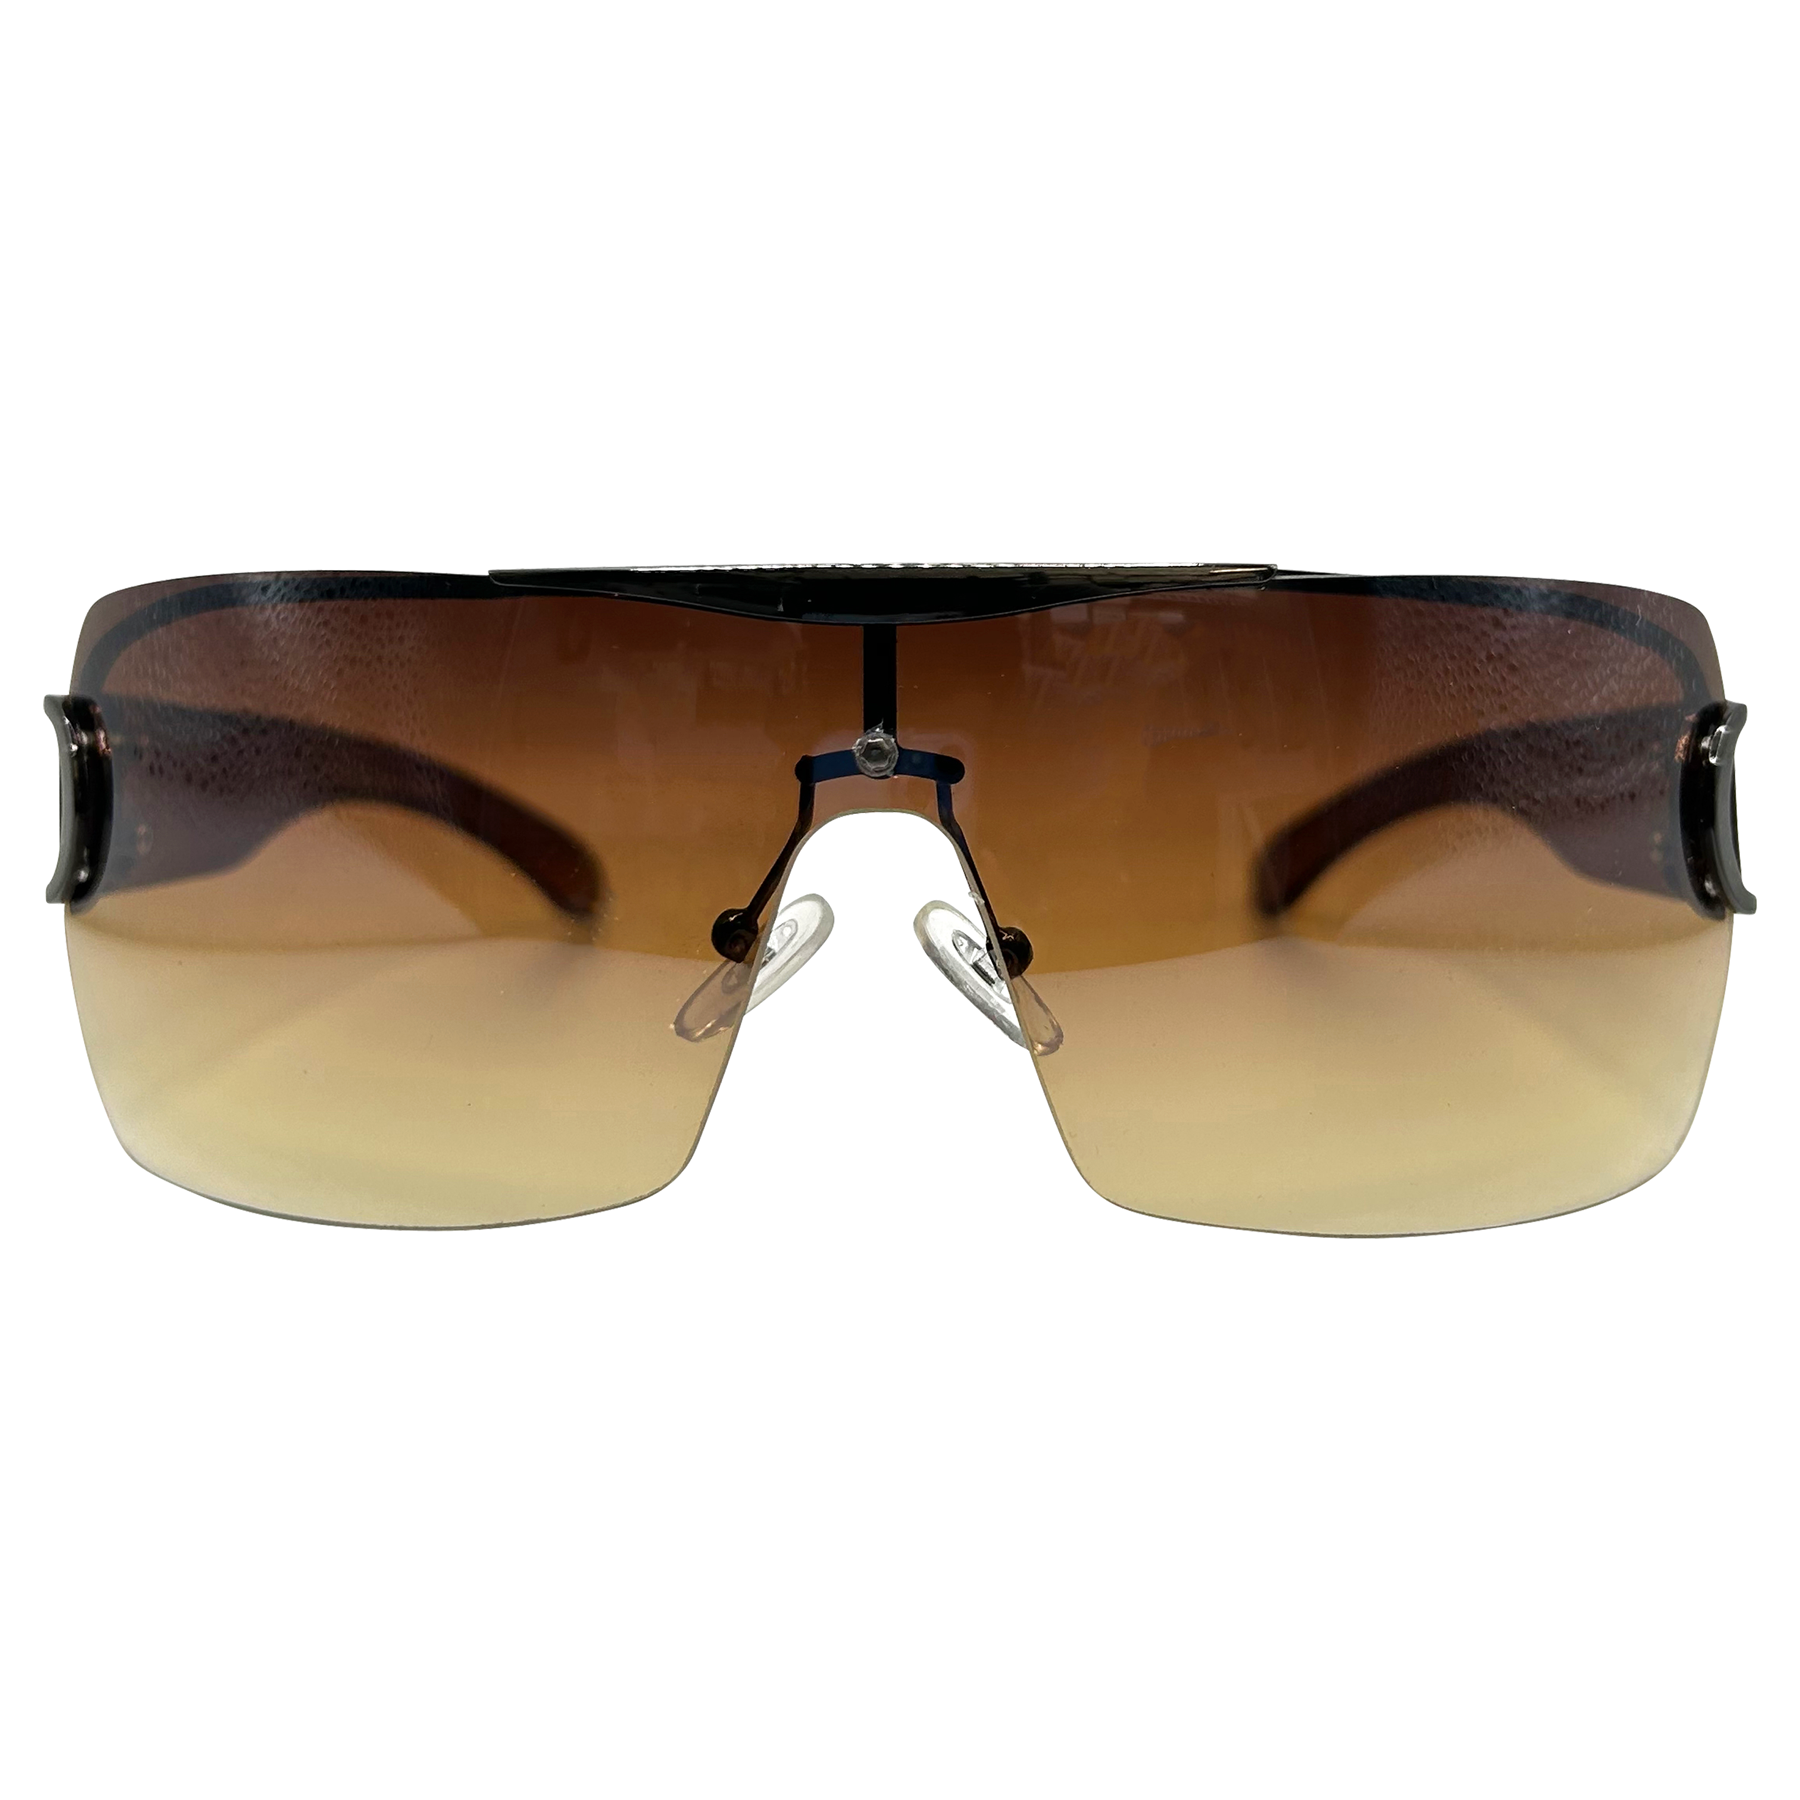 NERVOUS Shield Sunglasses